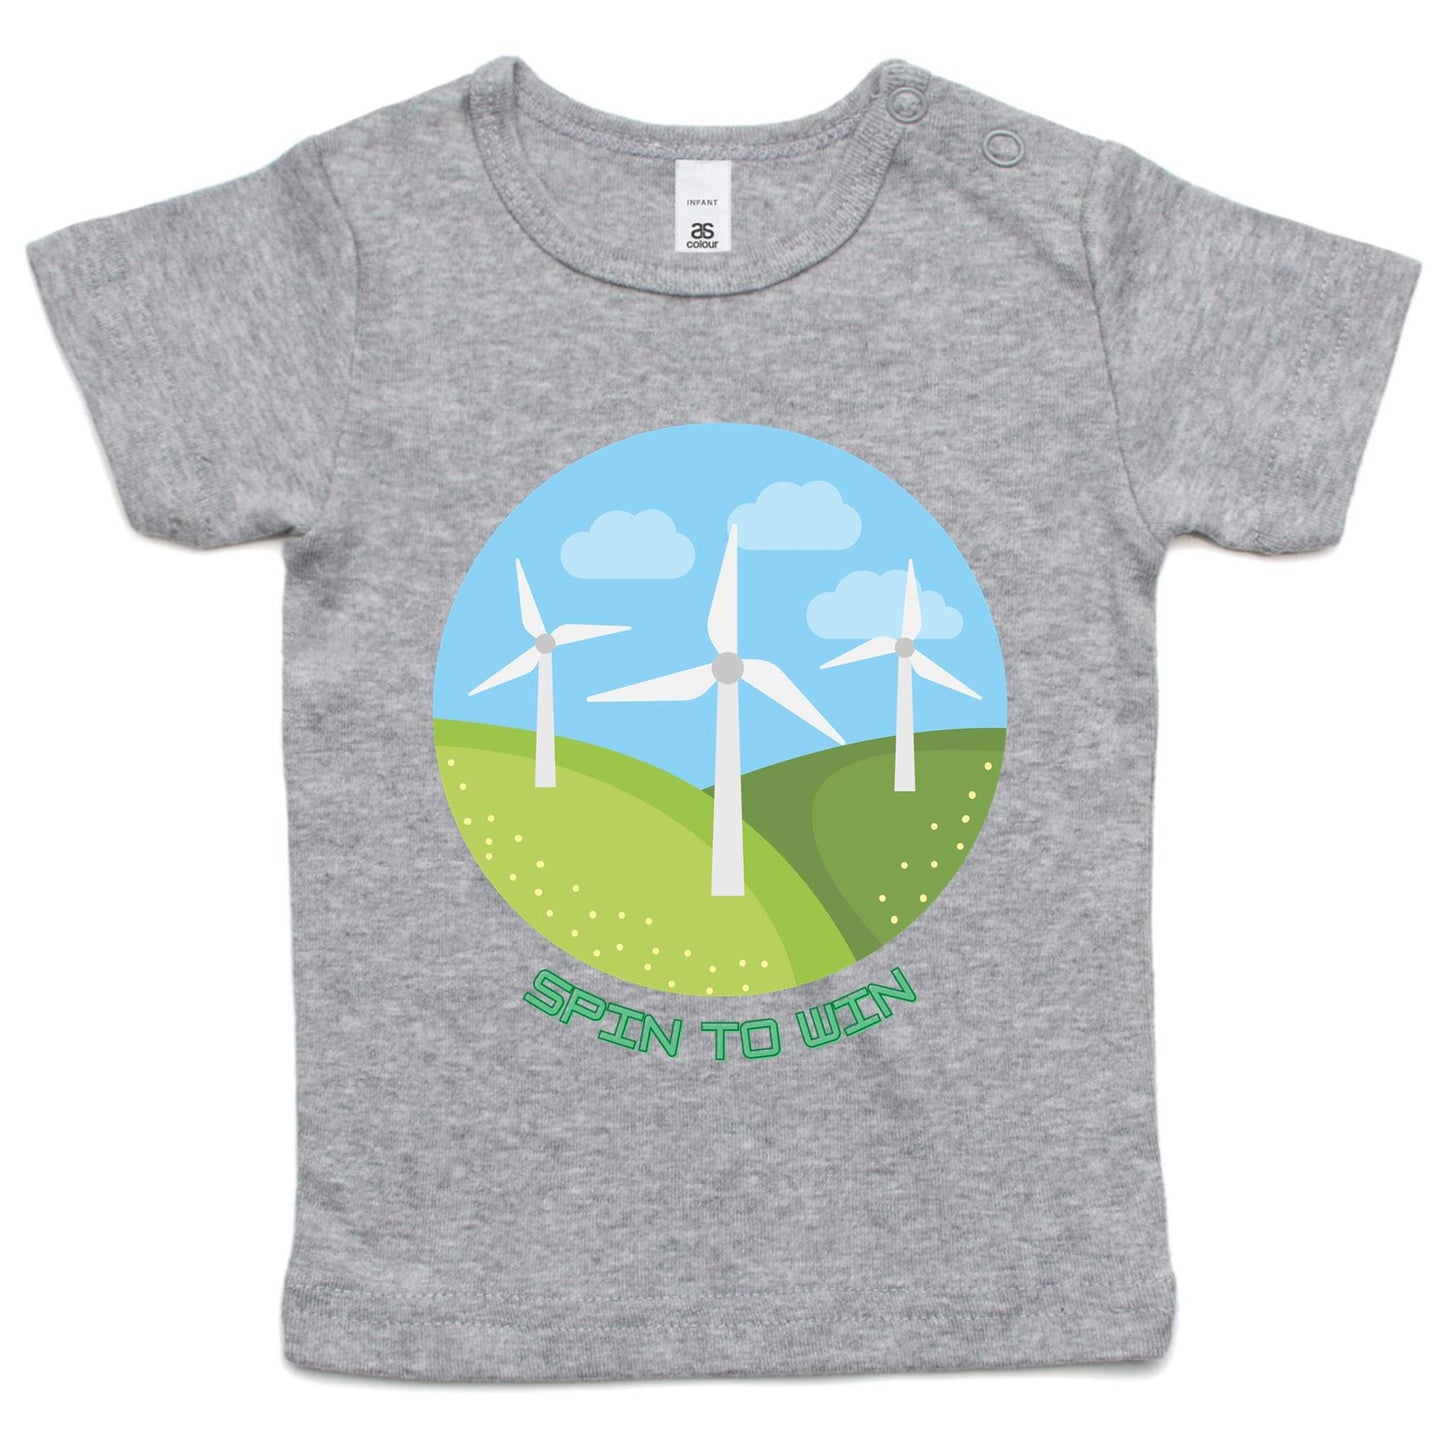 Spin To Win - Baby T-shirt Grey Marle Baby T-shirt Environment kids